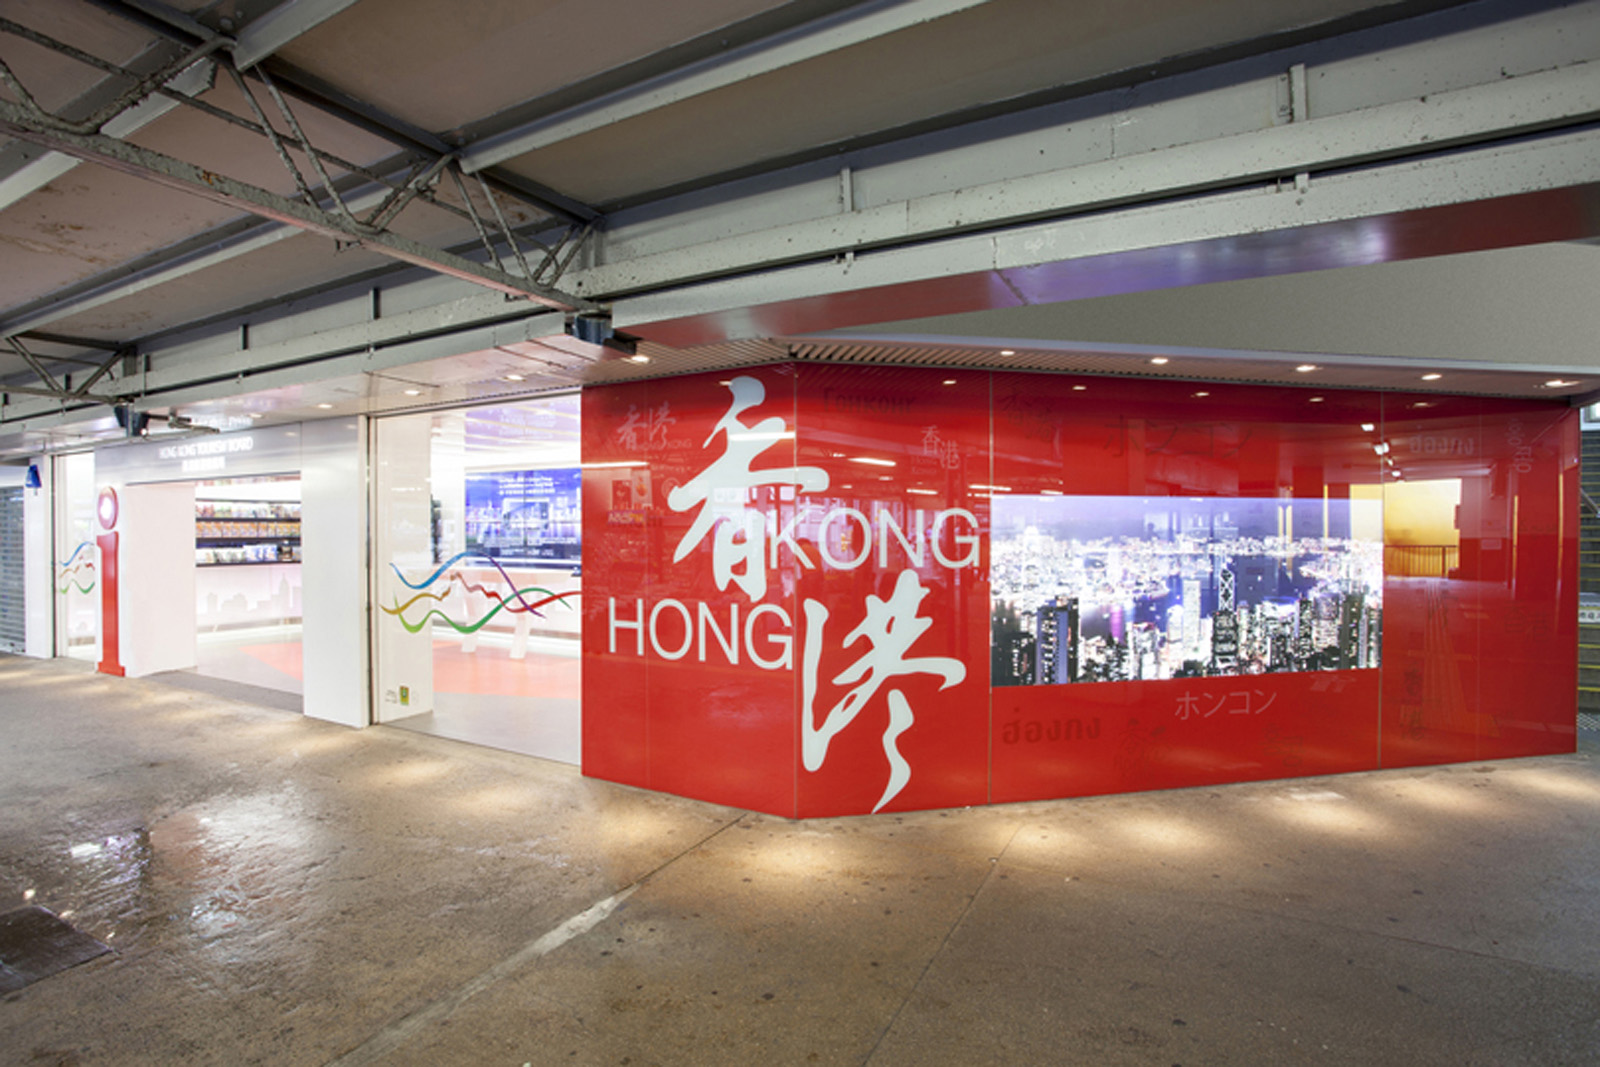 Hong Kong Tourism Board Visitor Center